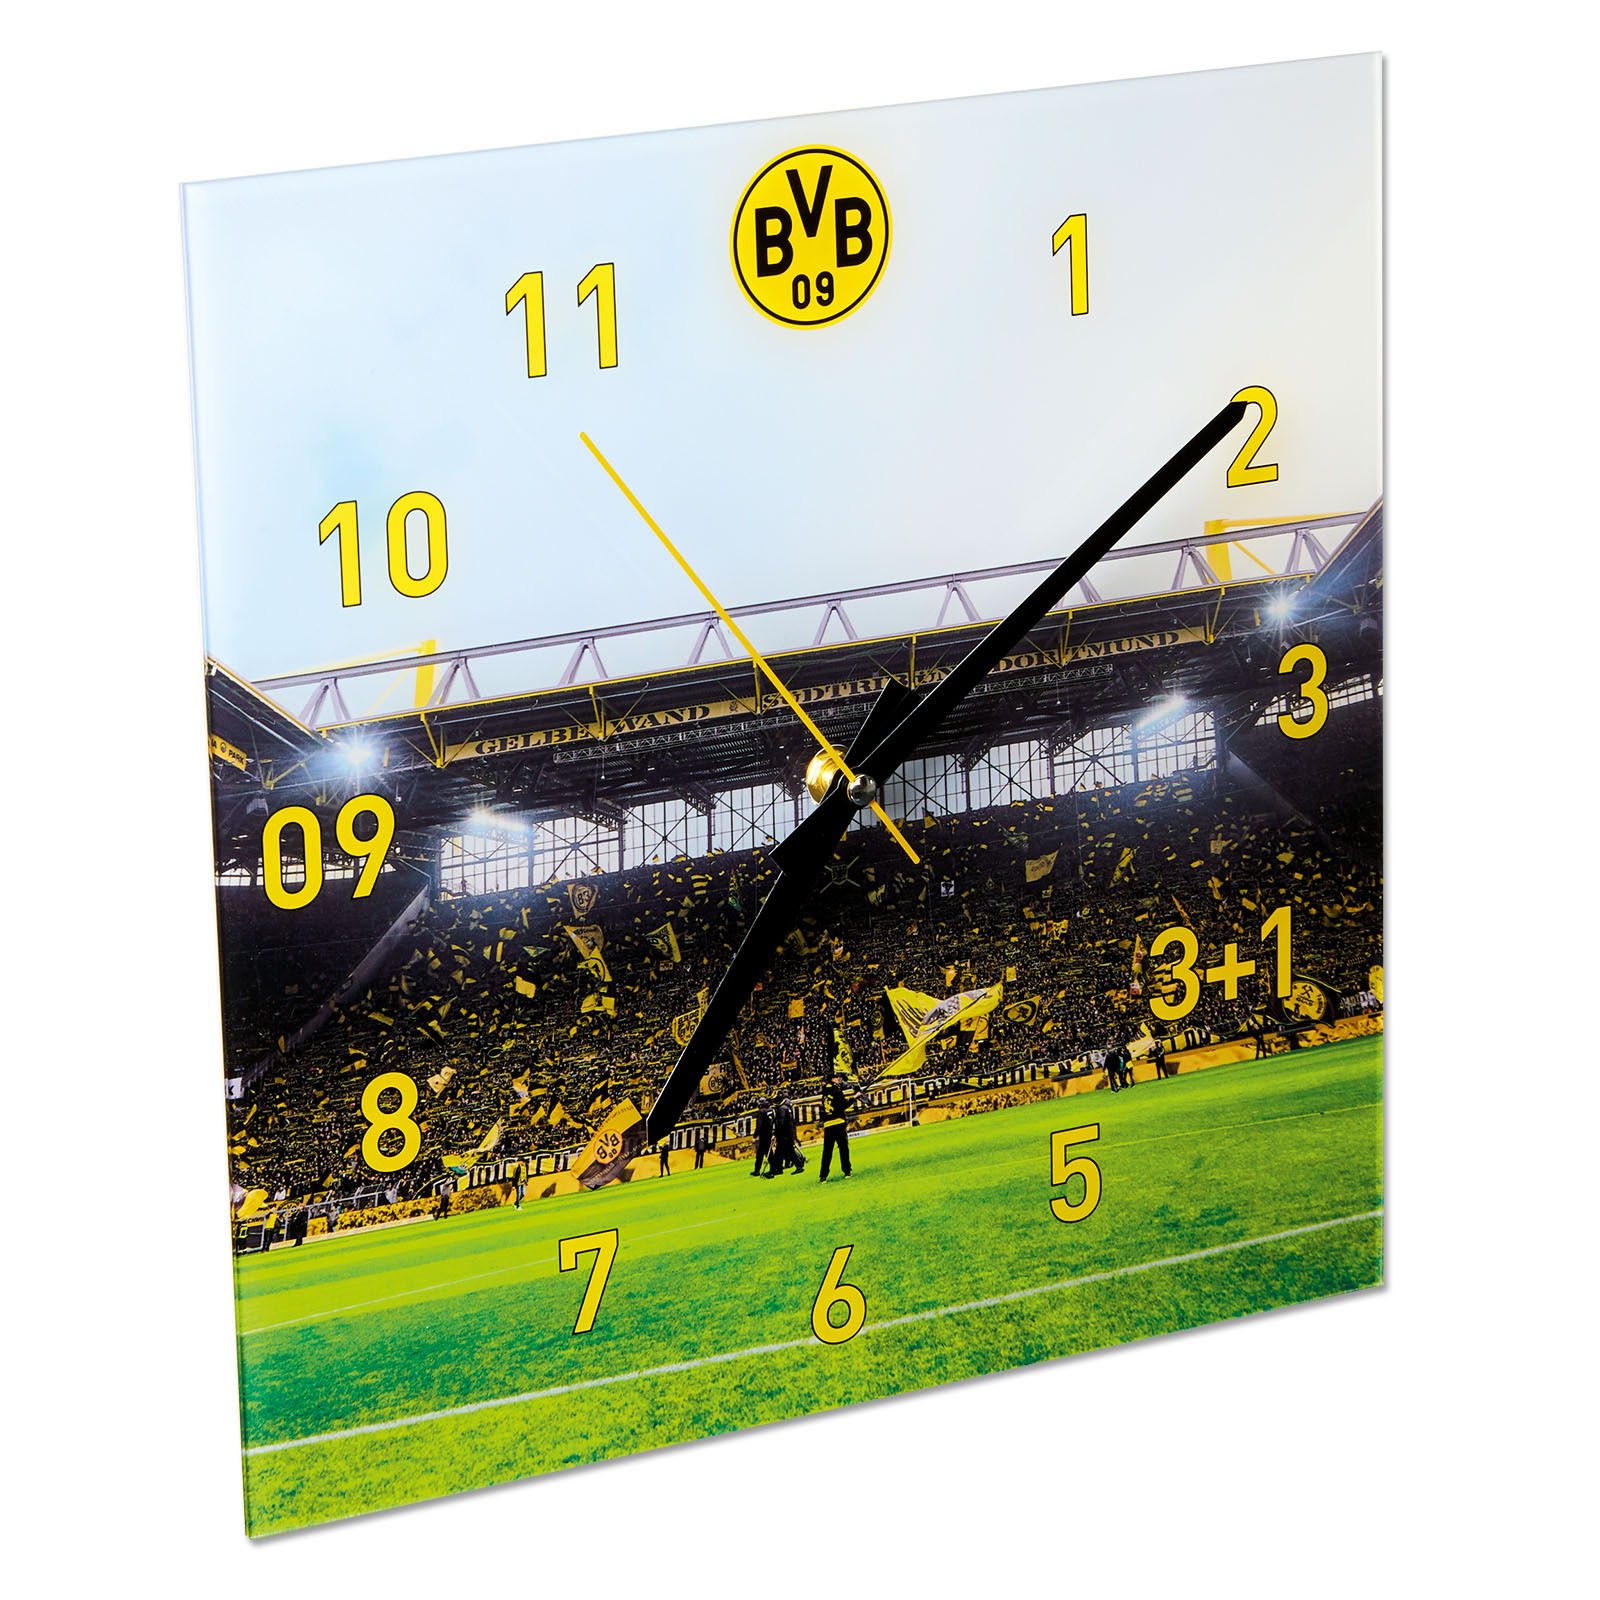 Borussia Dortmund Bvb Wanduhr Uhr Sudtribune Stadion 19910800 Ebay